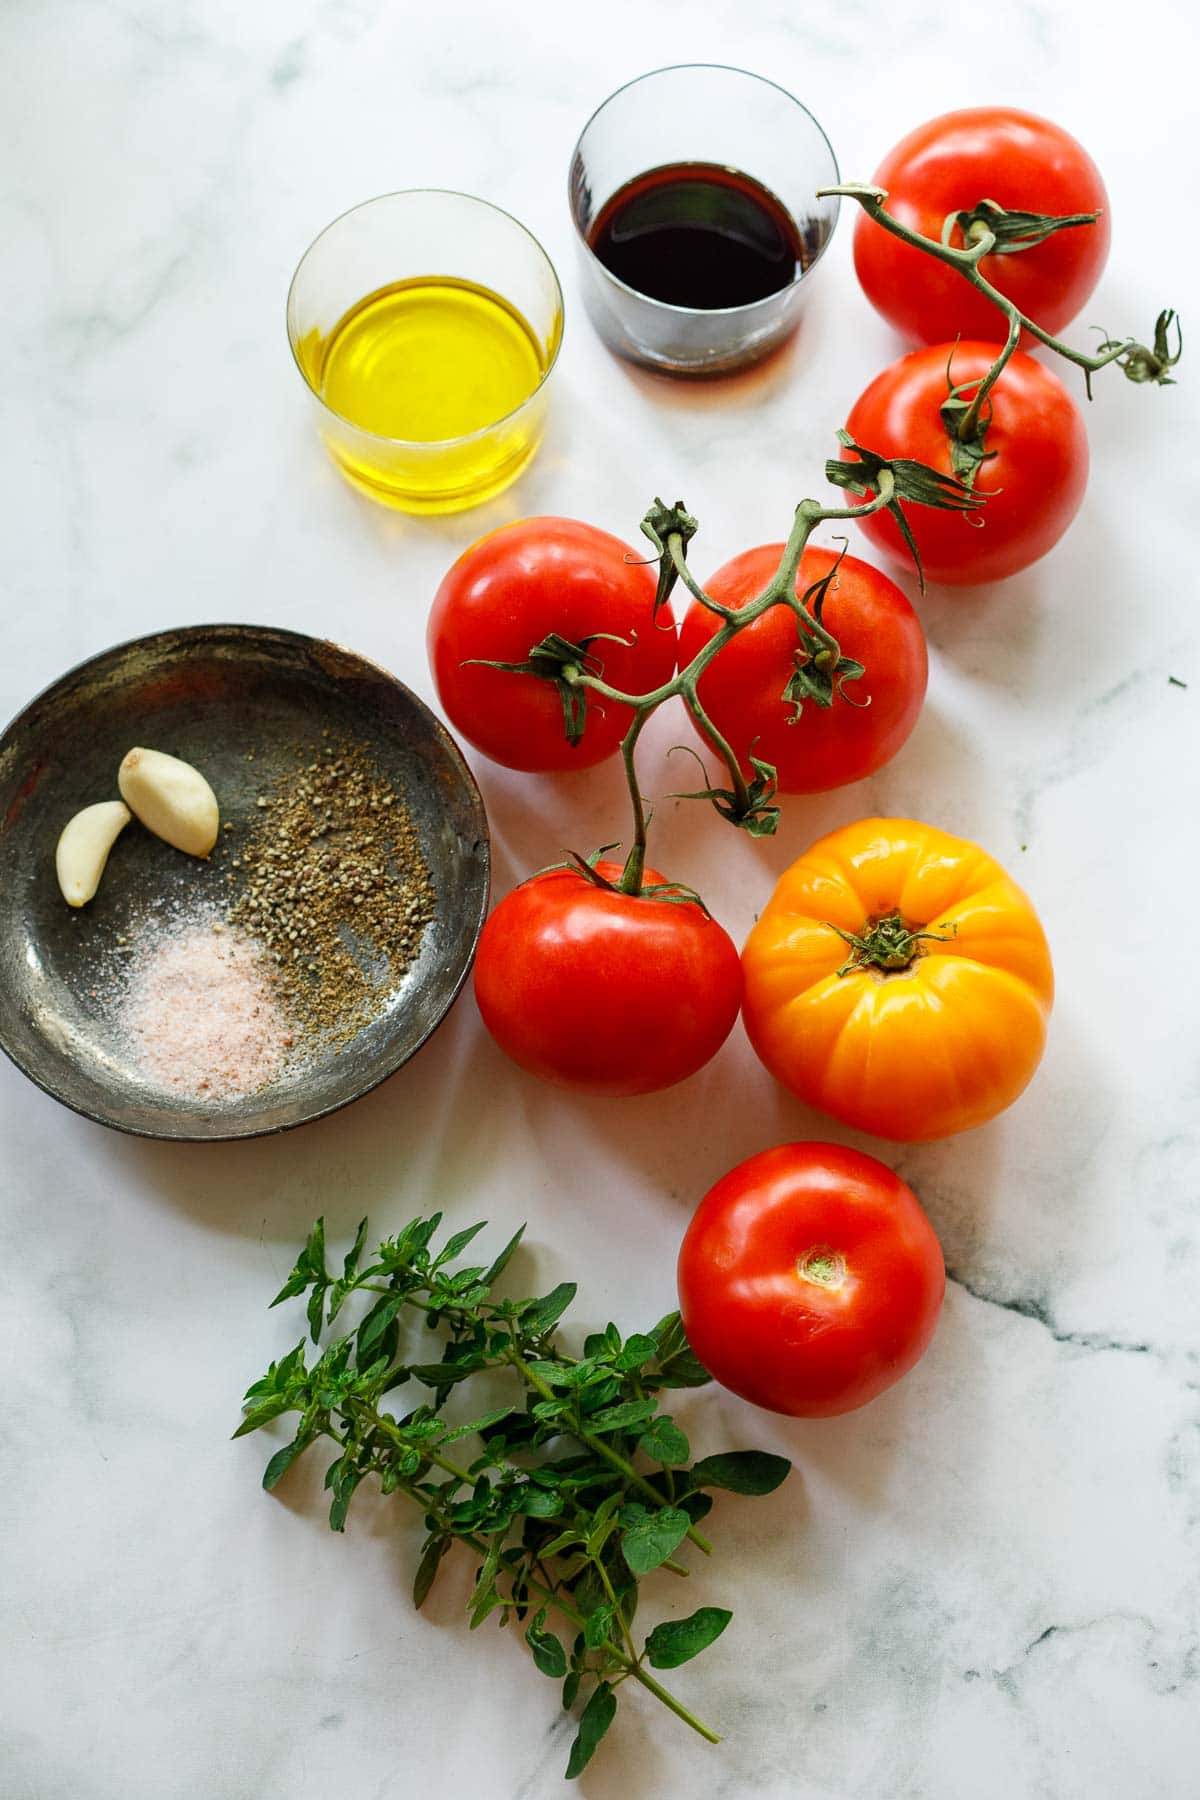 Ingredients: garlic, olive oil, oregano, balsamic vinegar, and salt and pepper. 